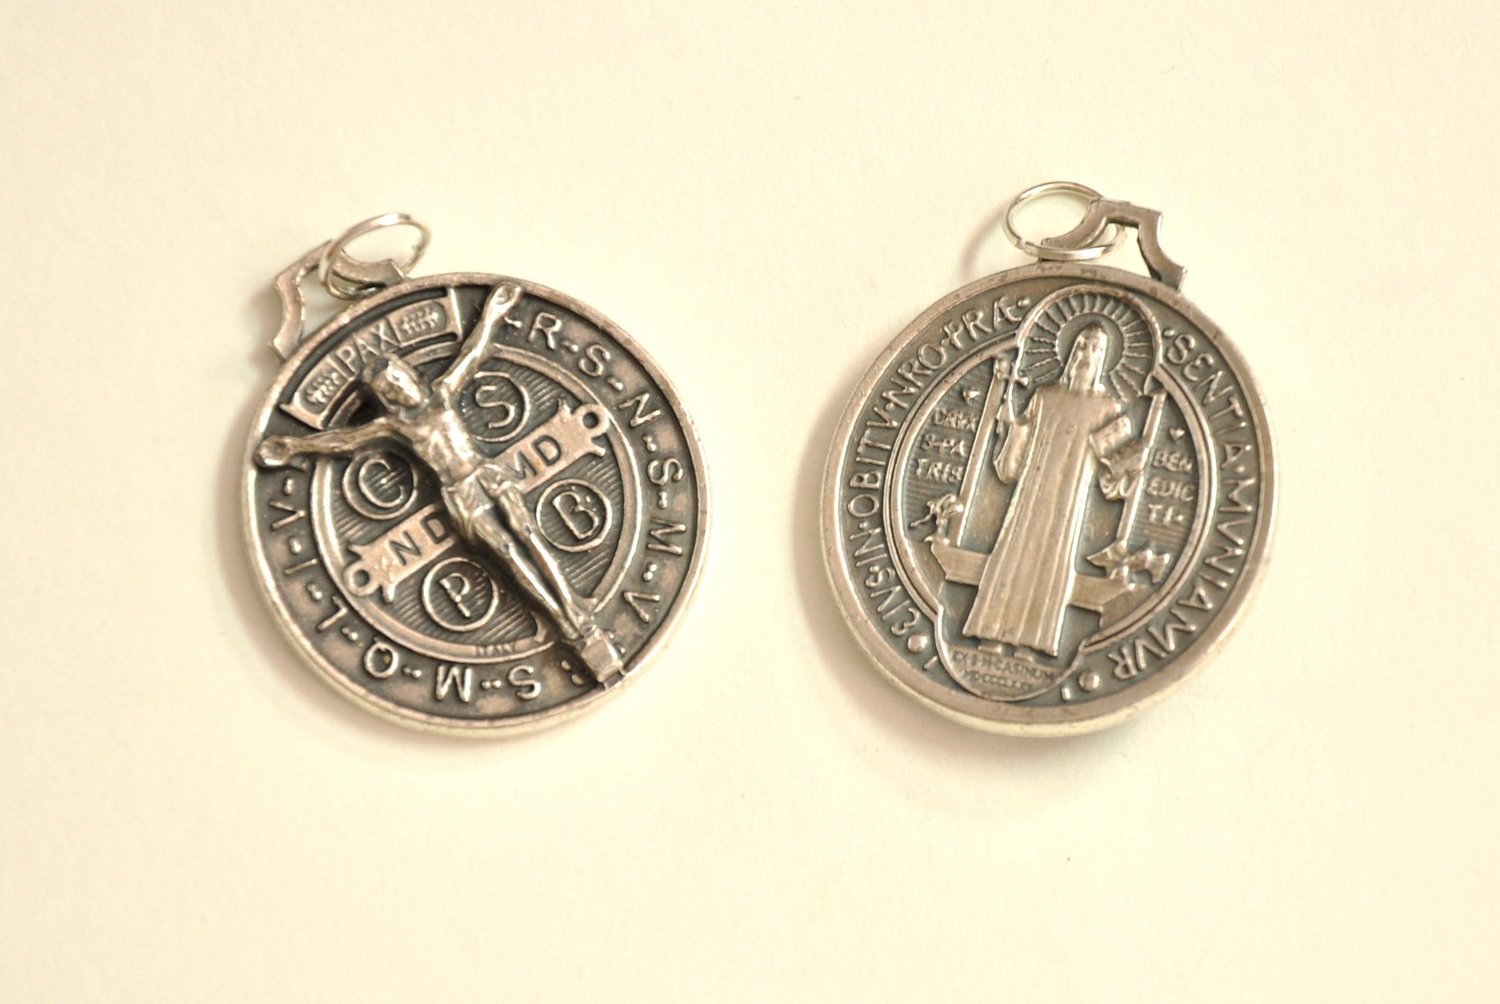 Saint Benedict Medal Key Necklace - Exorcism Amulet